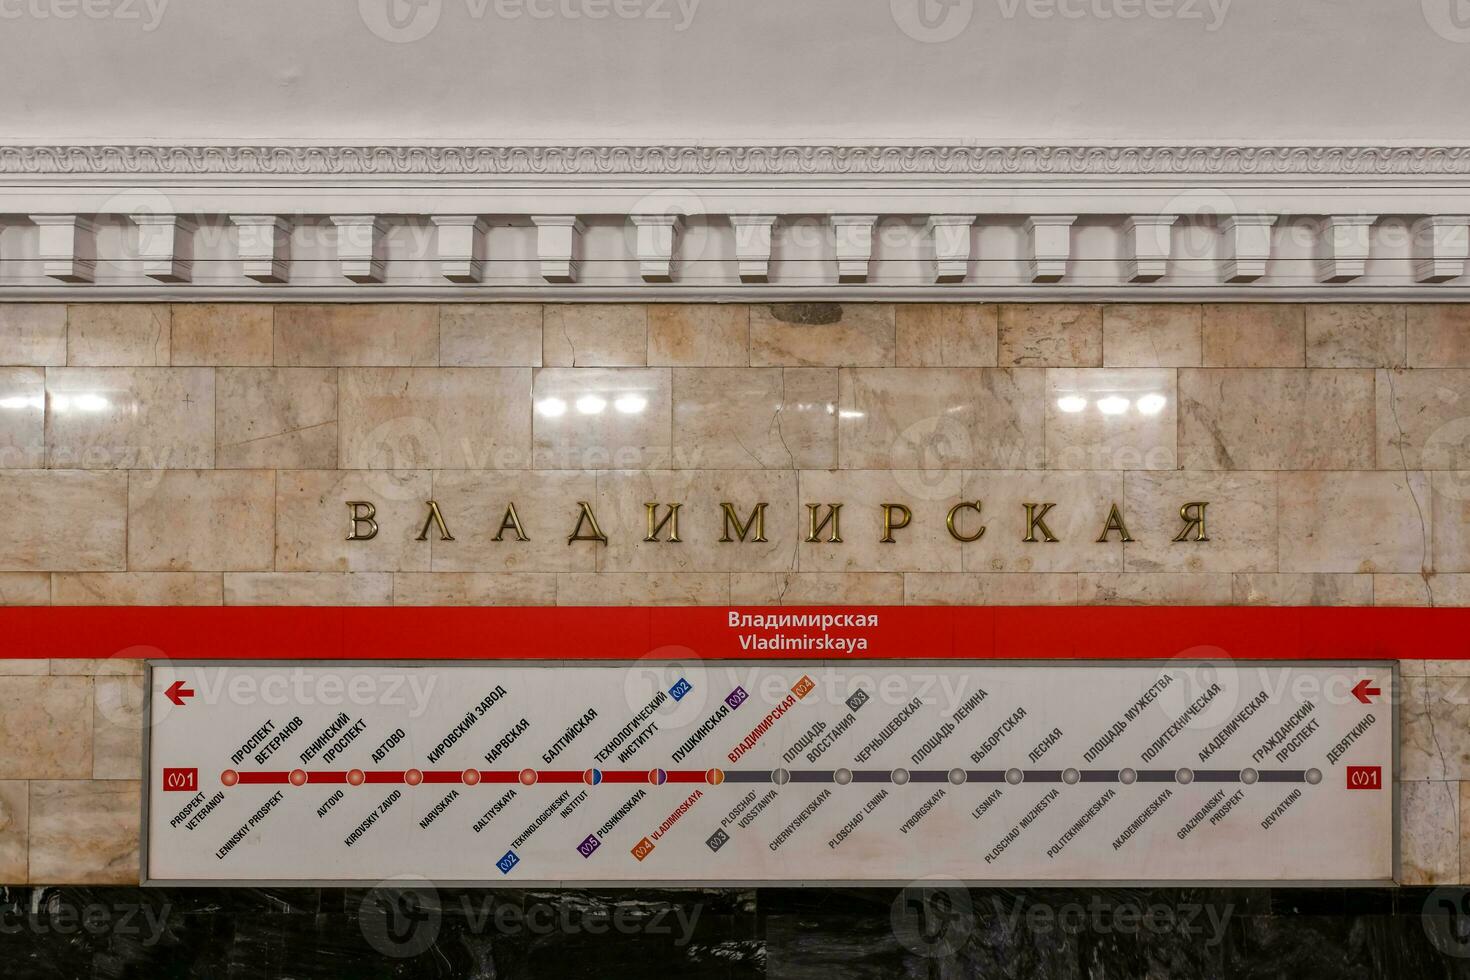 vladimirskaïa station - Saint Pétersbourg, Russie photo